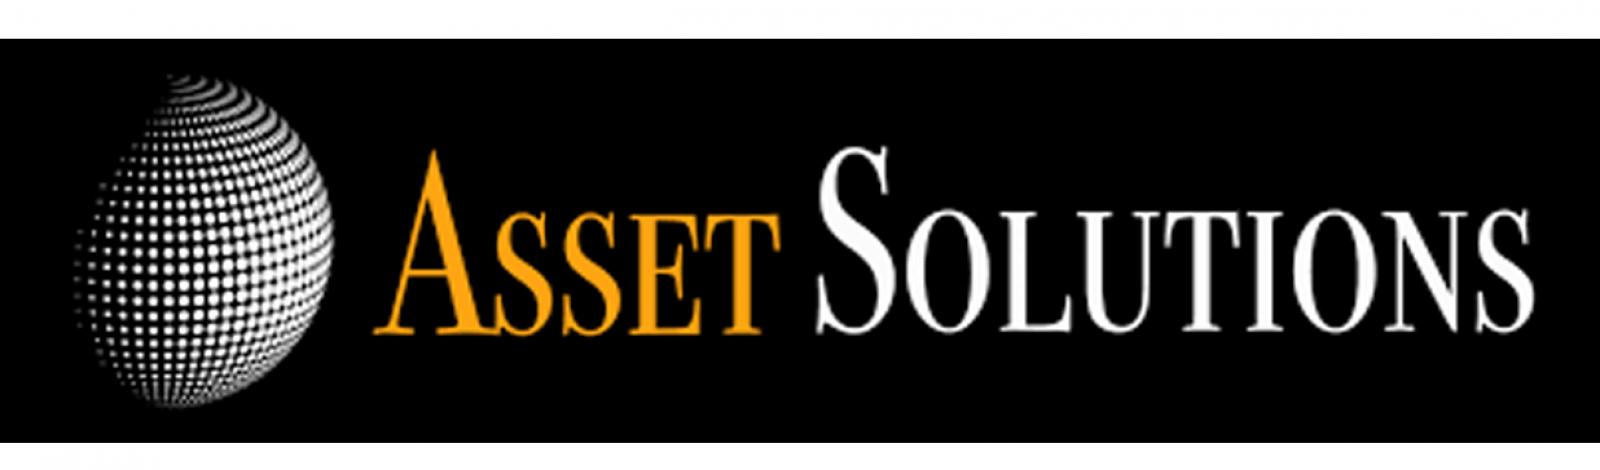 Asset solution ltd. banner